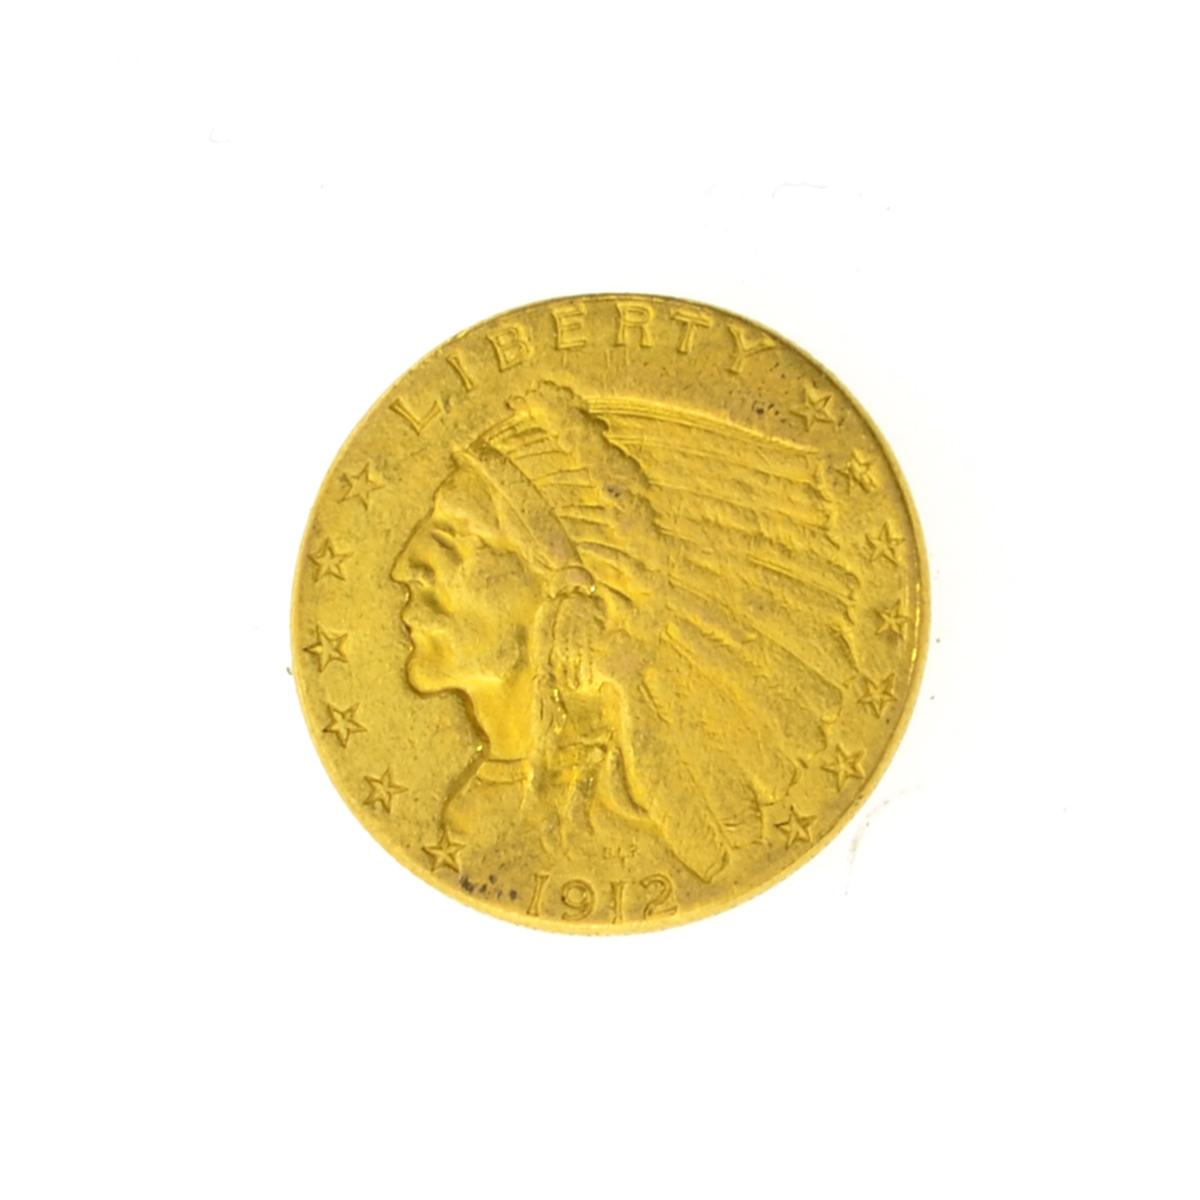 *1912 $2.50 U.S. Indian Head Gold Coin (JG)